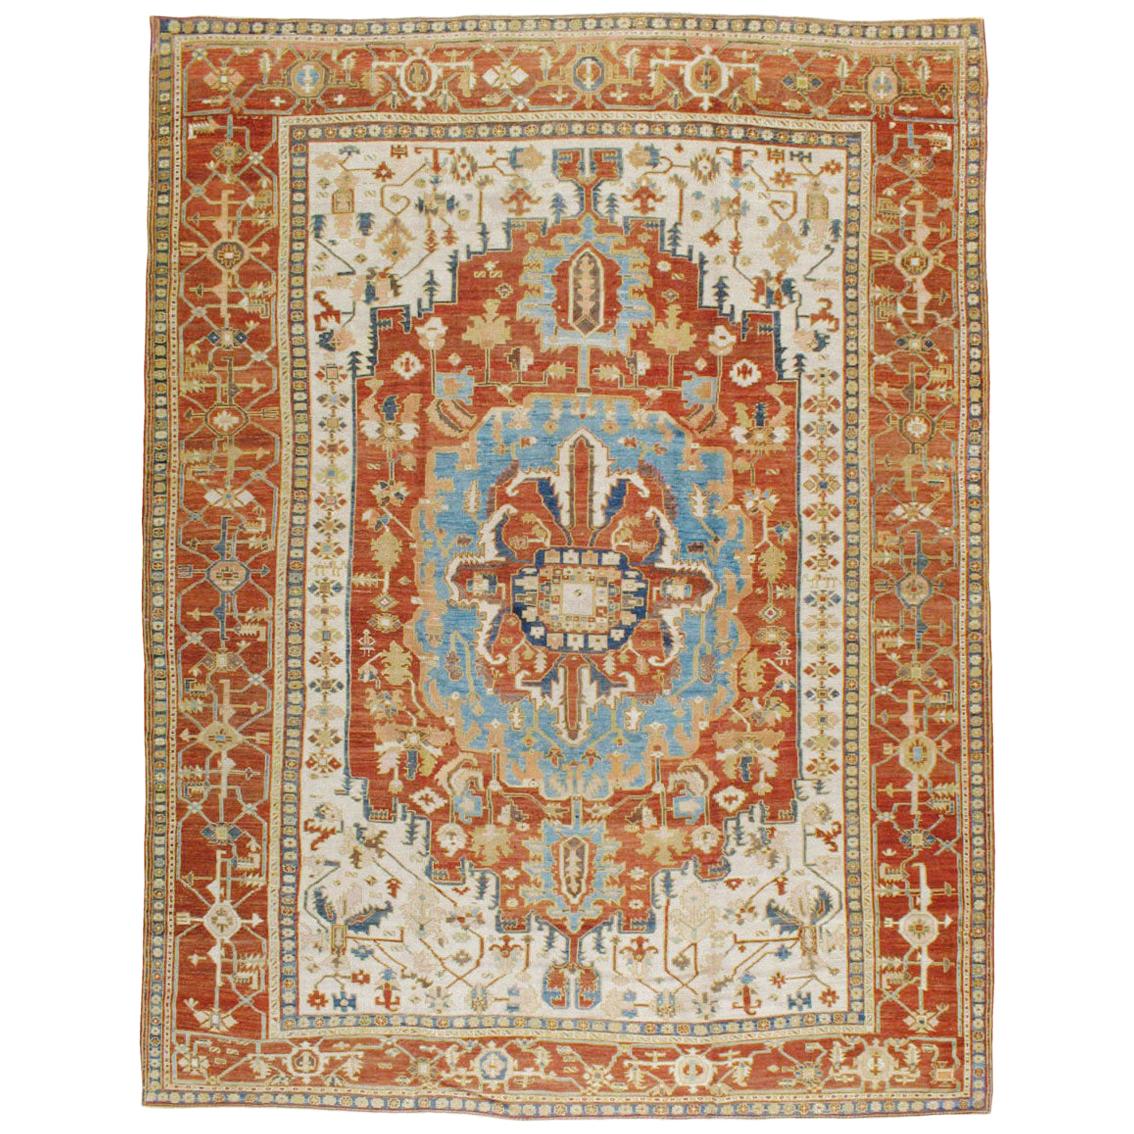 Early 20th Century Handmade Persian Serapi Large Room Size Carpet